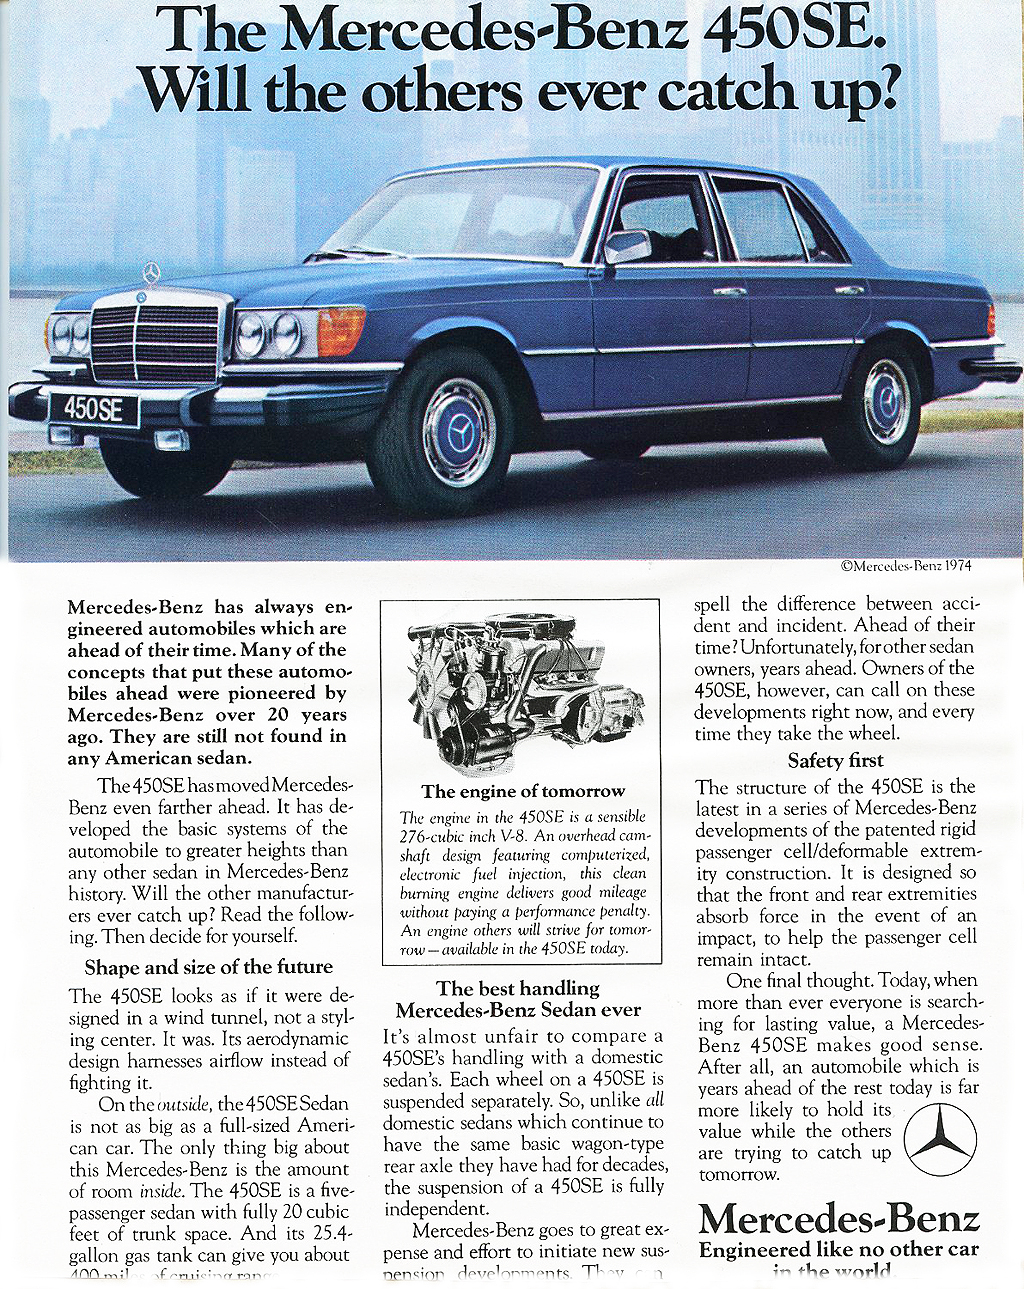 1974 Mercedes-Benz Advertising